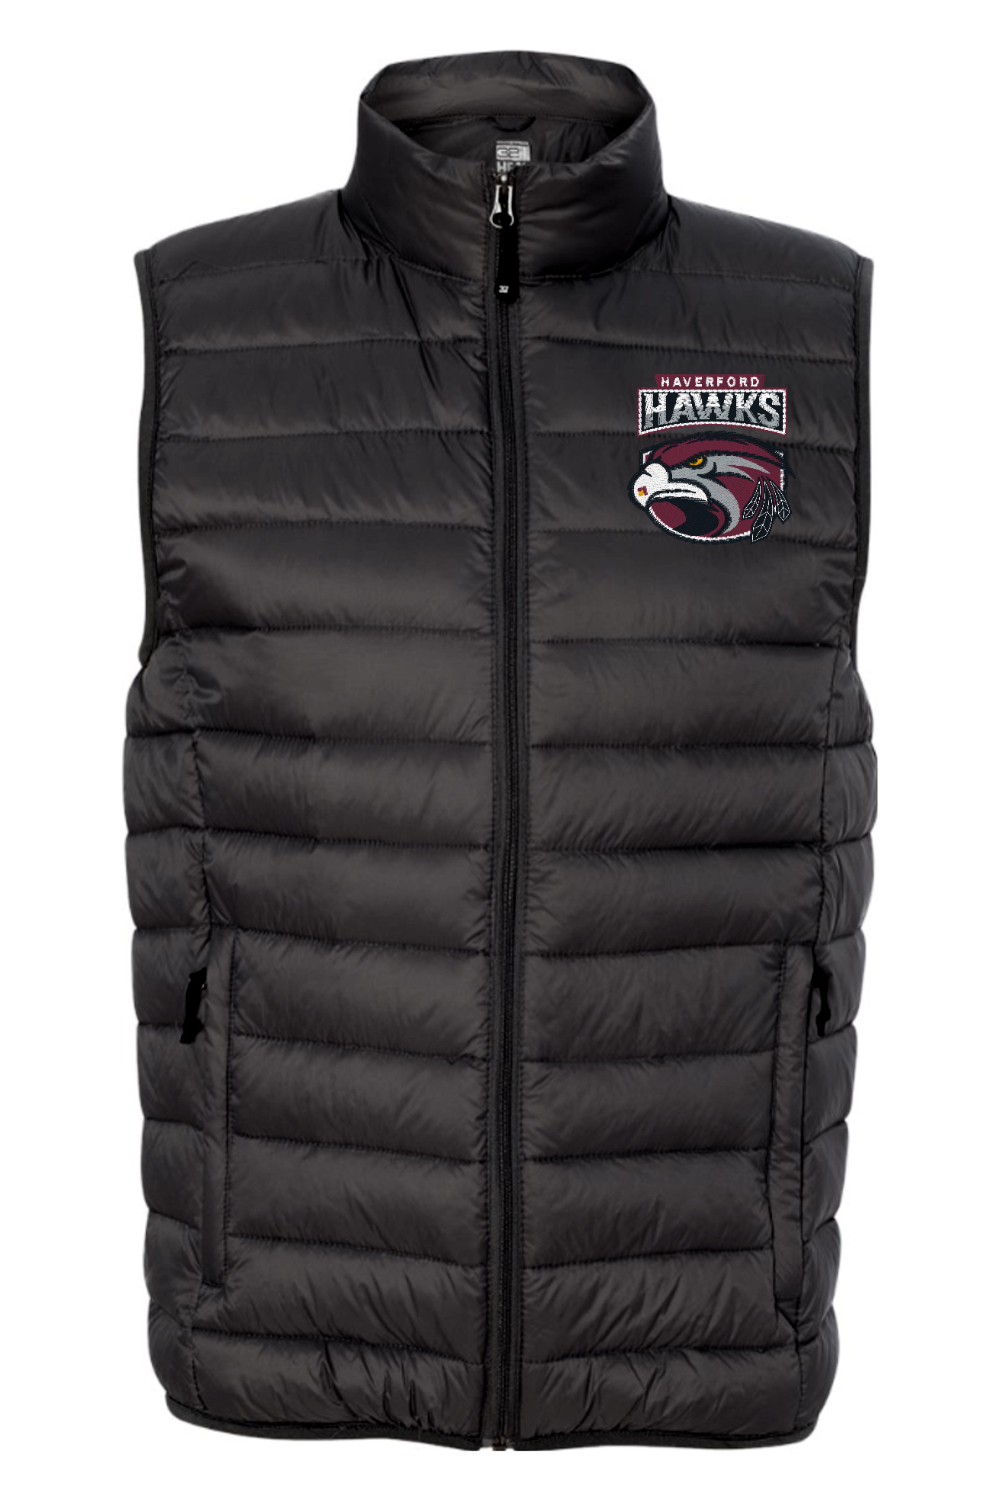 Hawks Embroidered Mens Weatherproof 32 Degrees Packable Down Vest